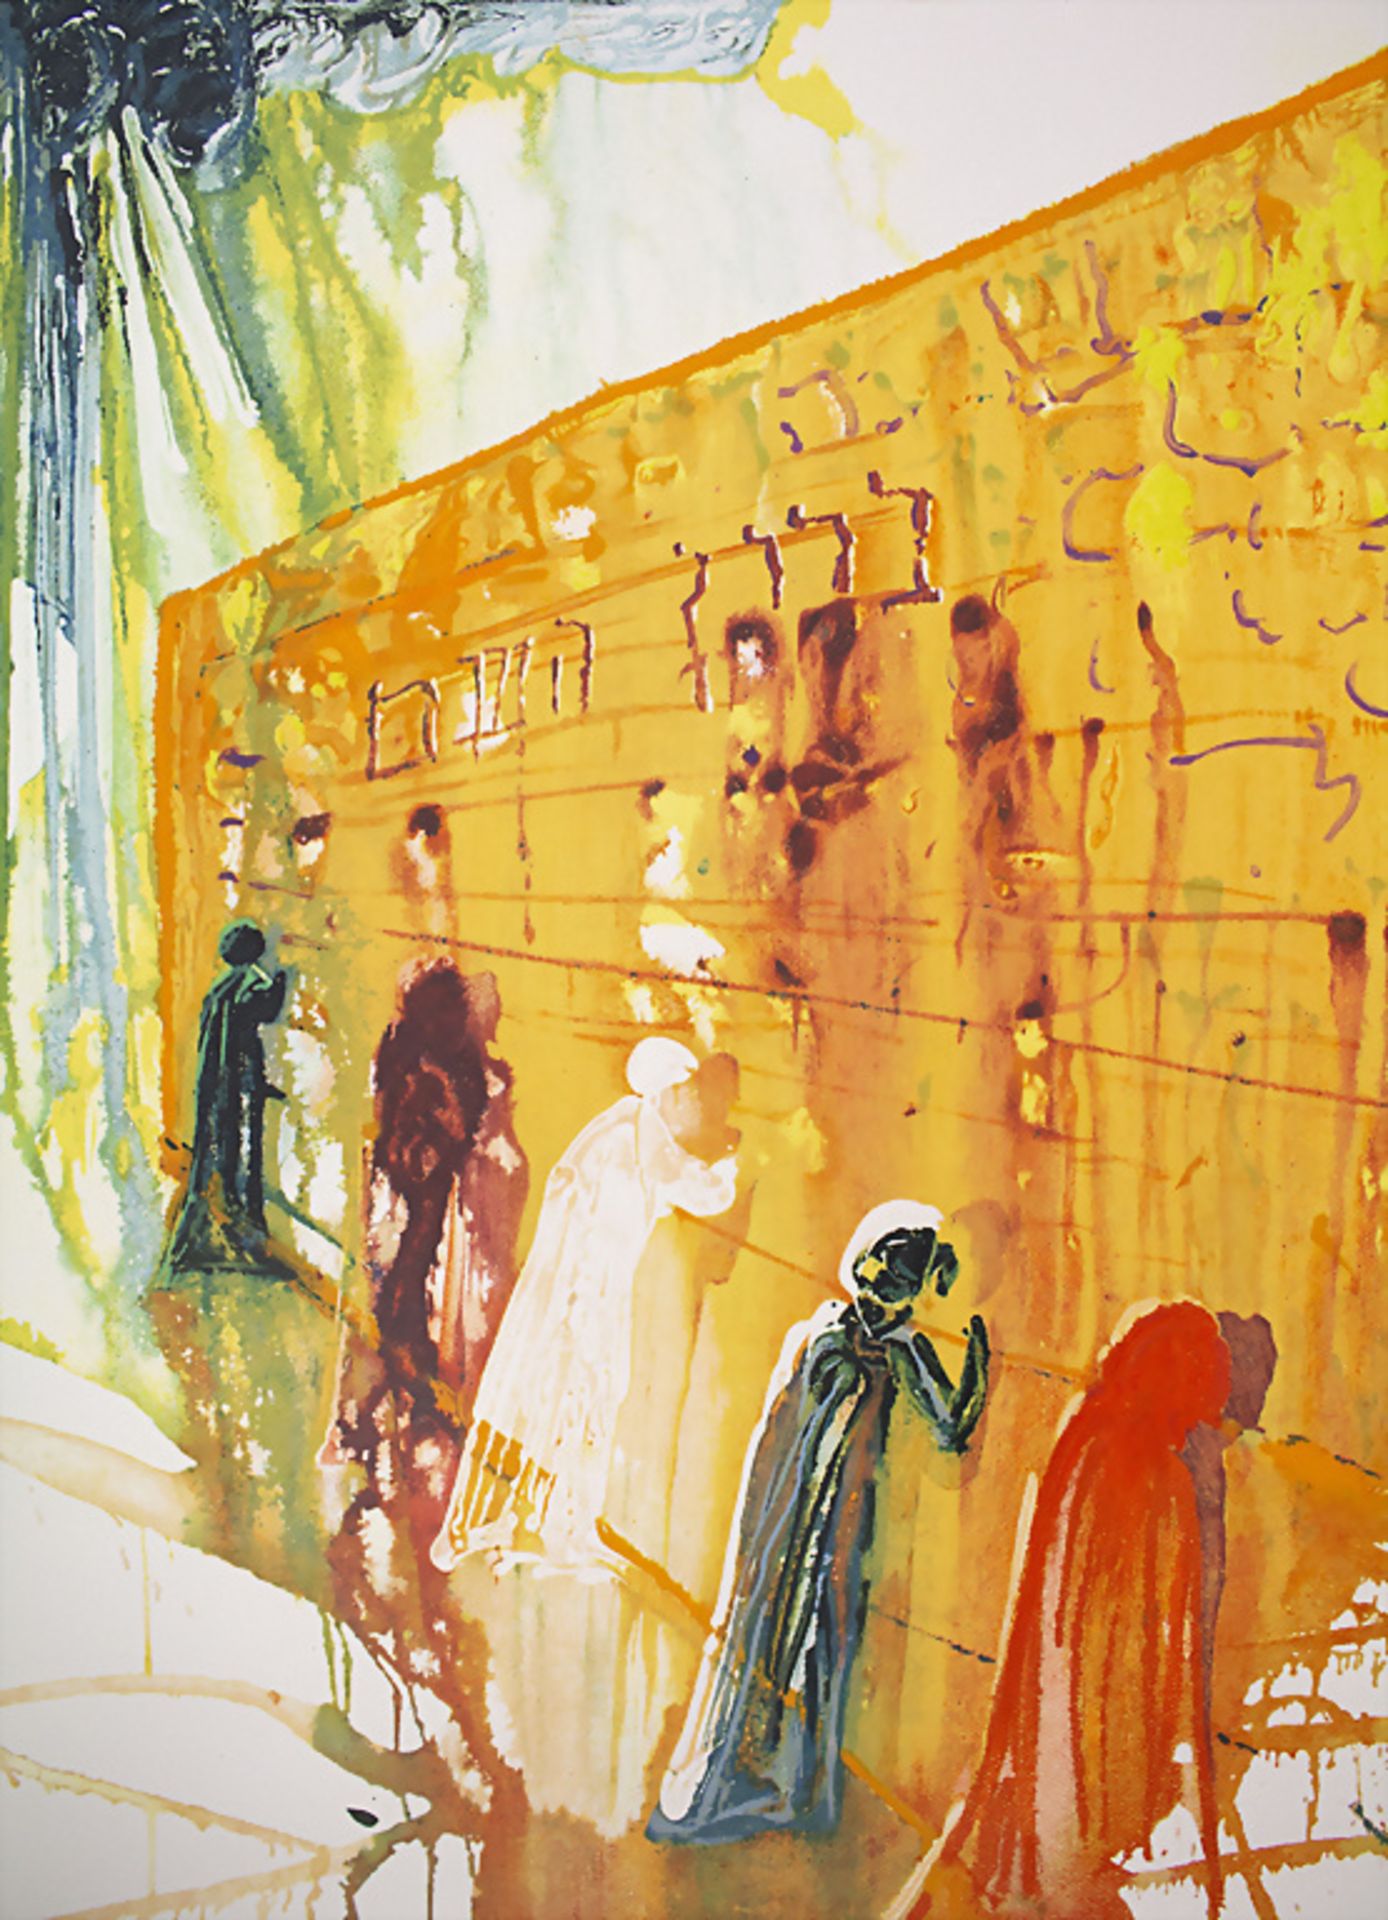 Salvador DALI (1904-1989), 'Die Klagemauer' / 'The Wailing Wall' (Field 78-7), 1975